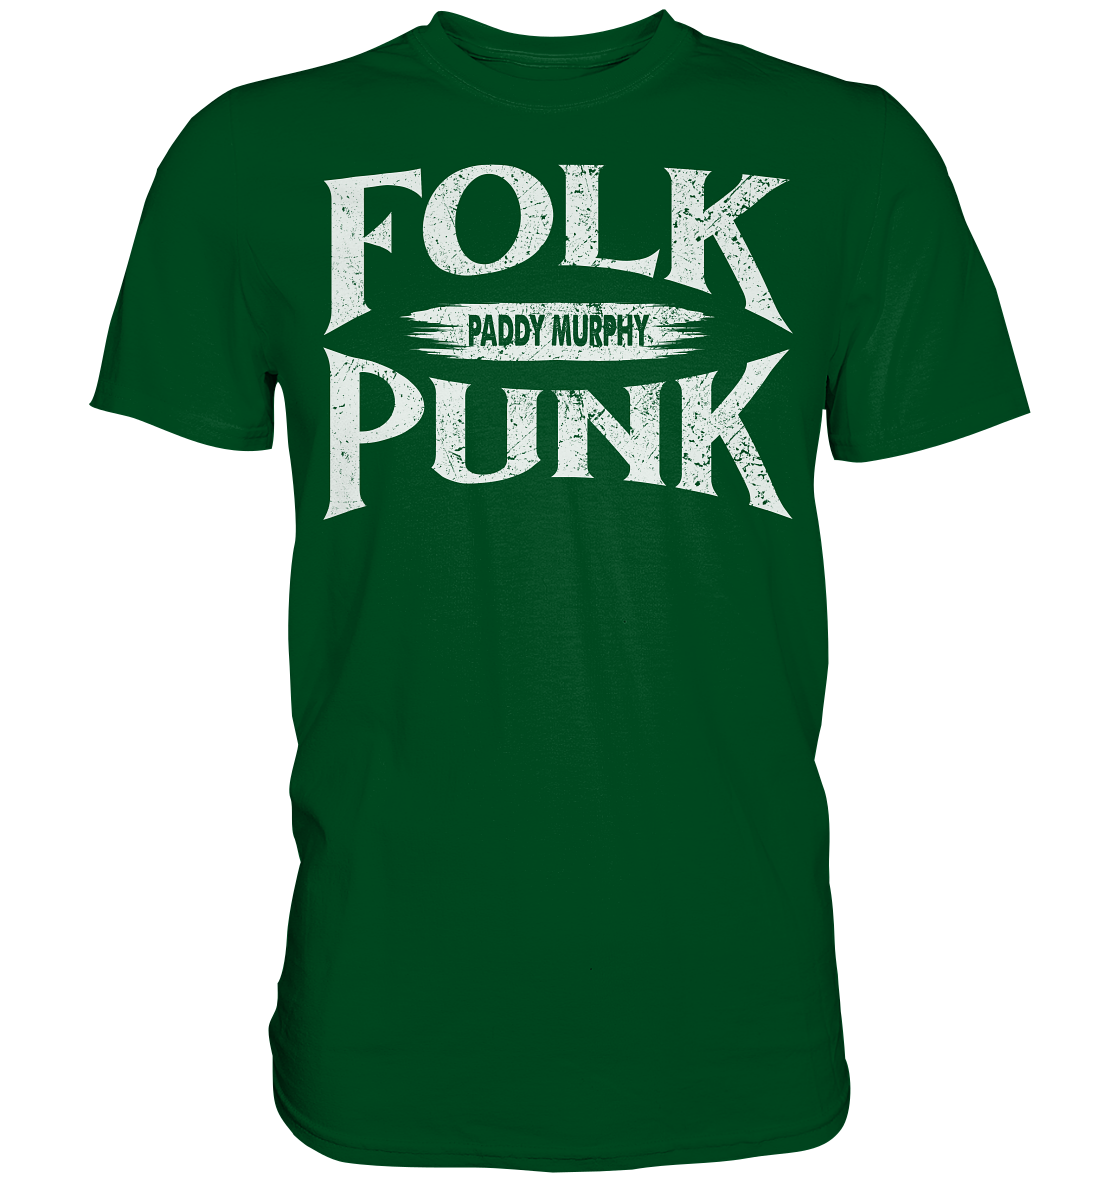 Folkpunk "Paddy Murphy" - Premium Shirt